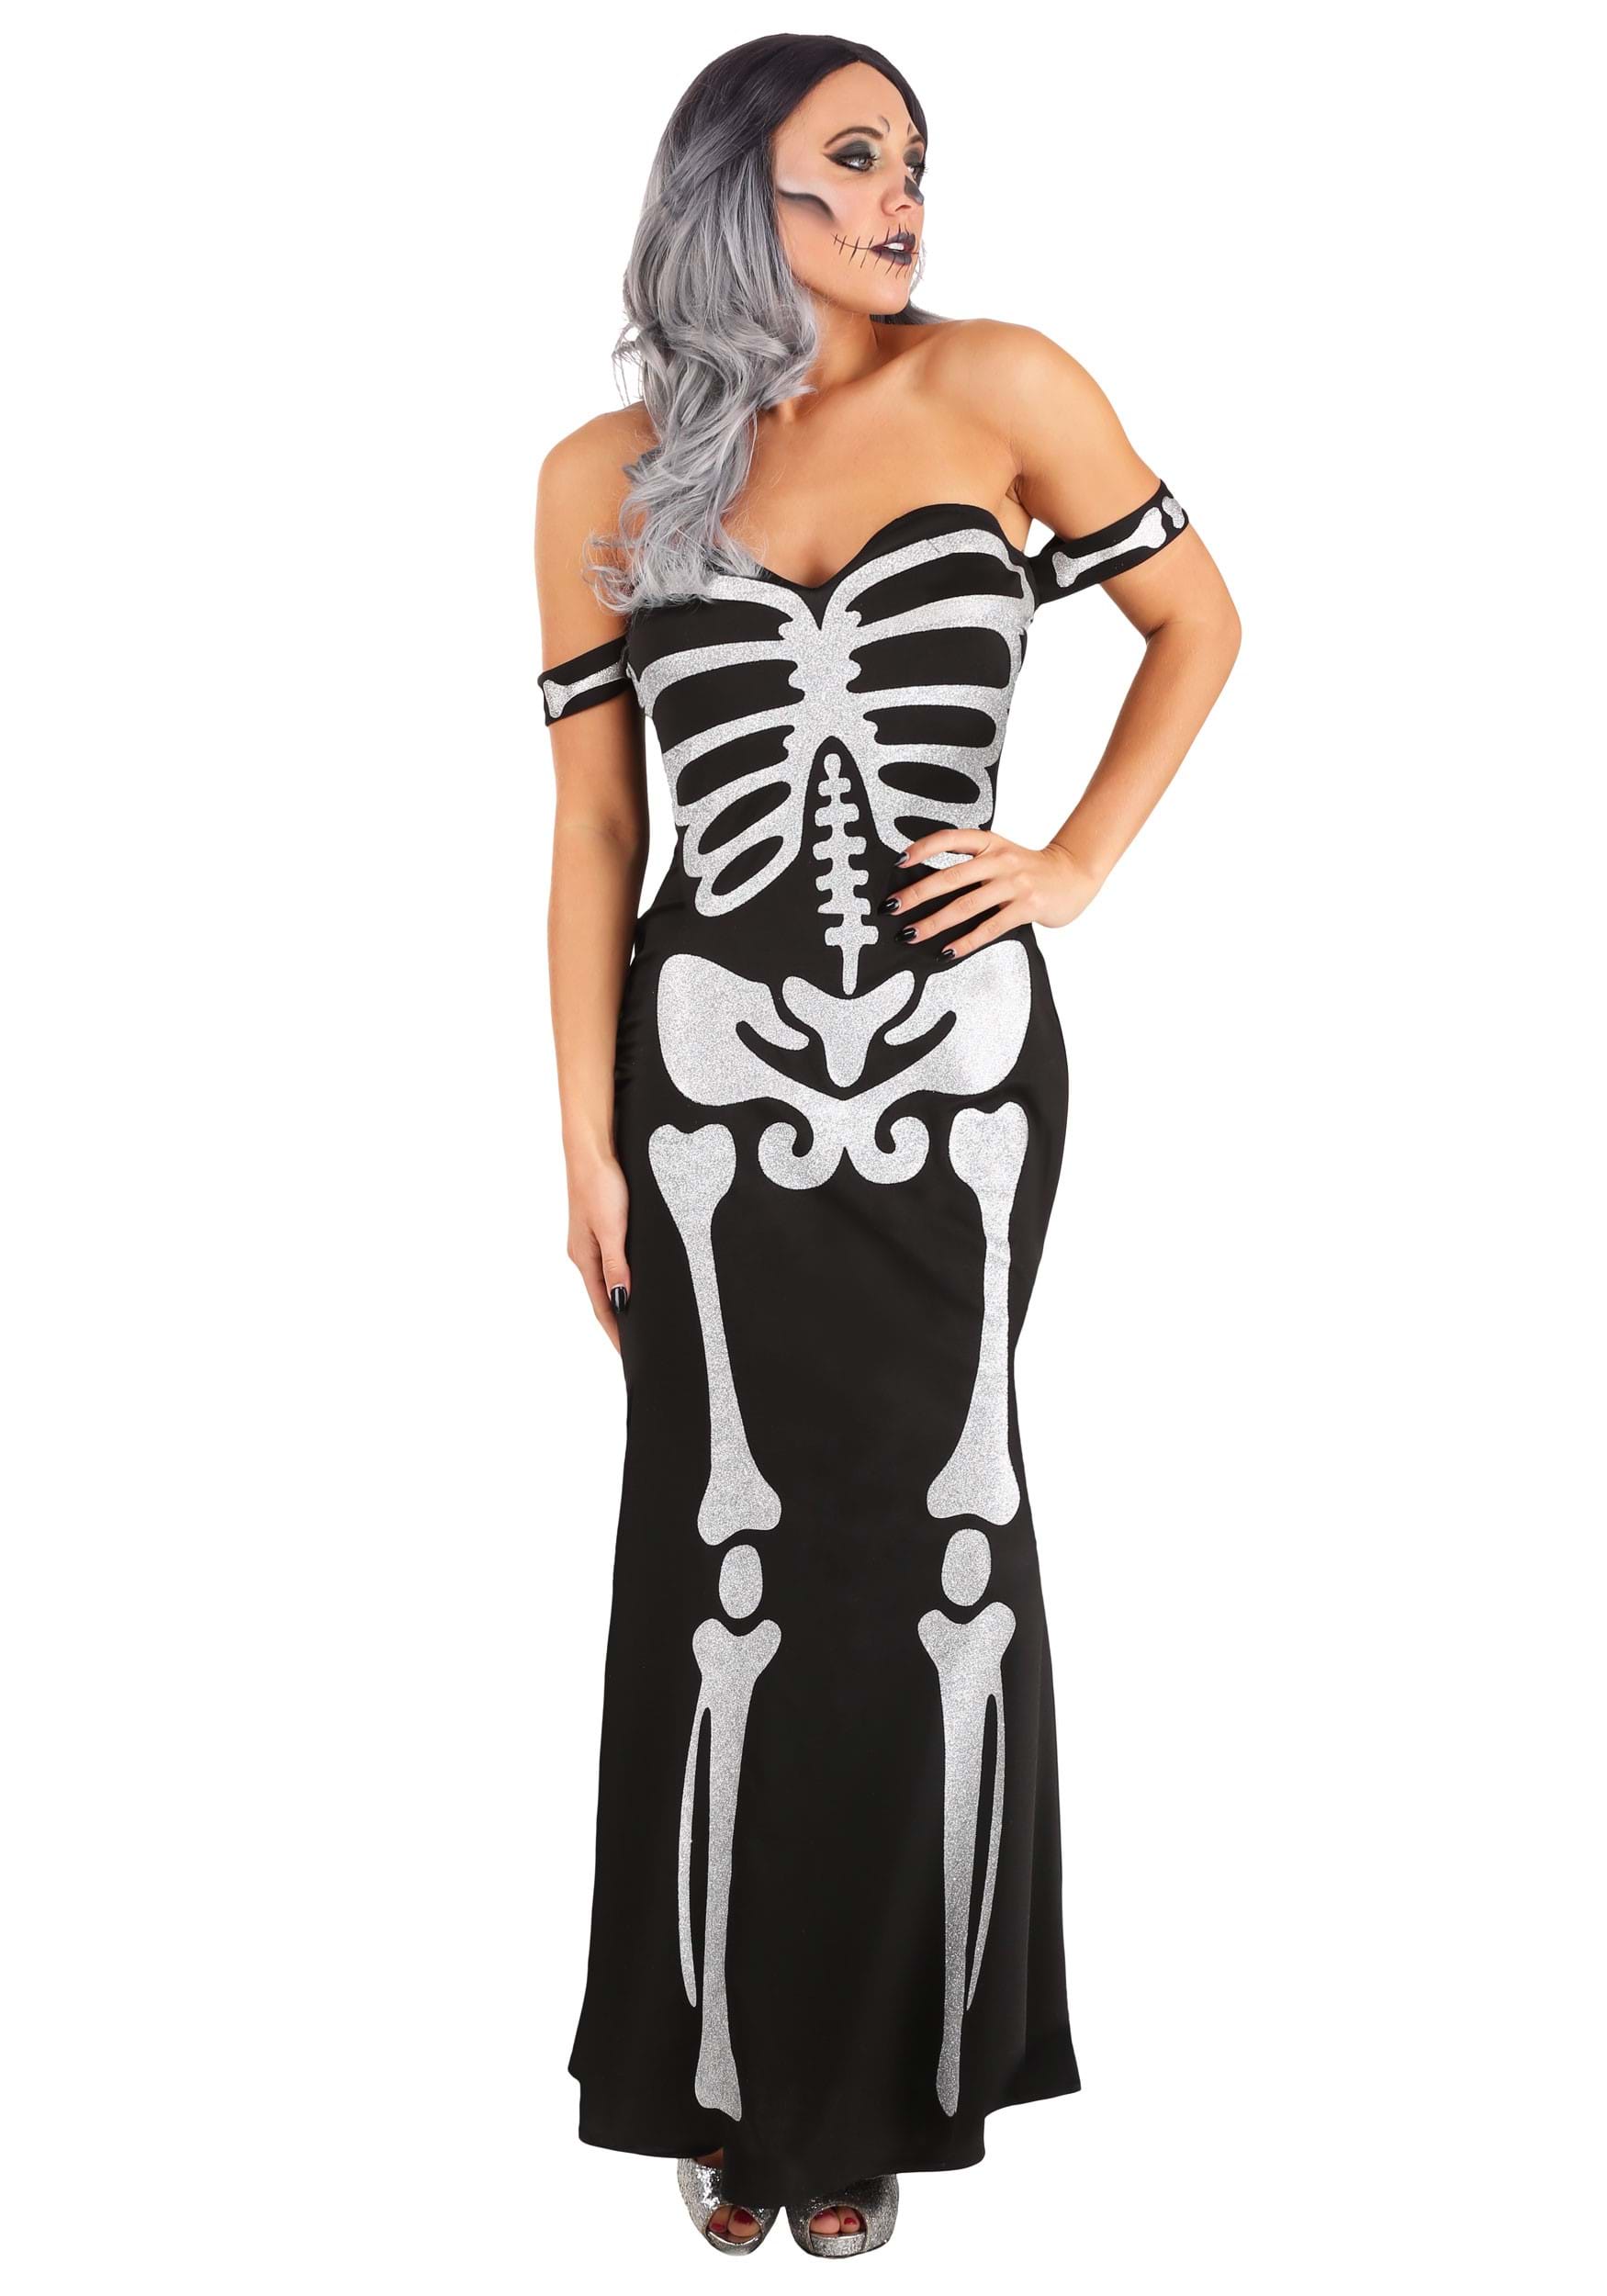 High Fashion Skeleton Womens Fancy Dress Costume